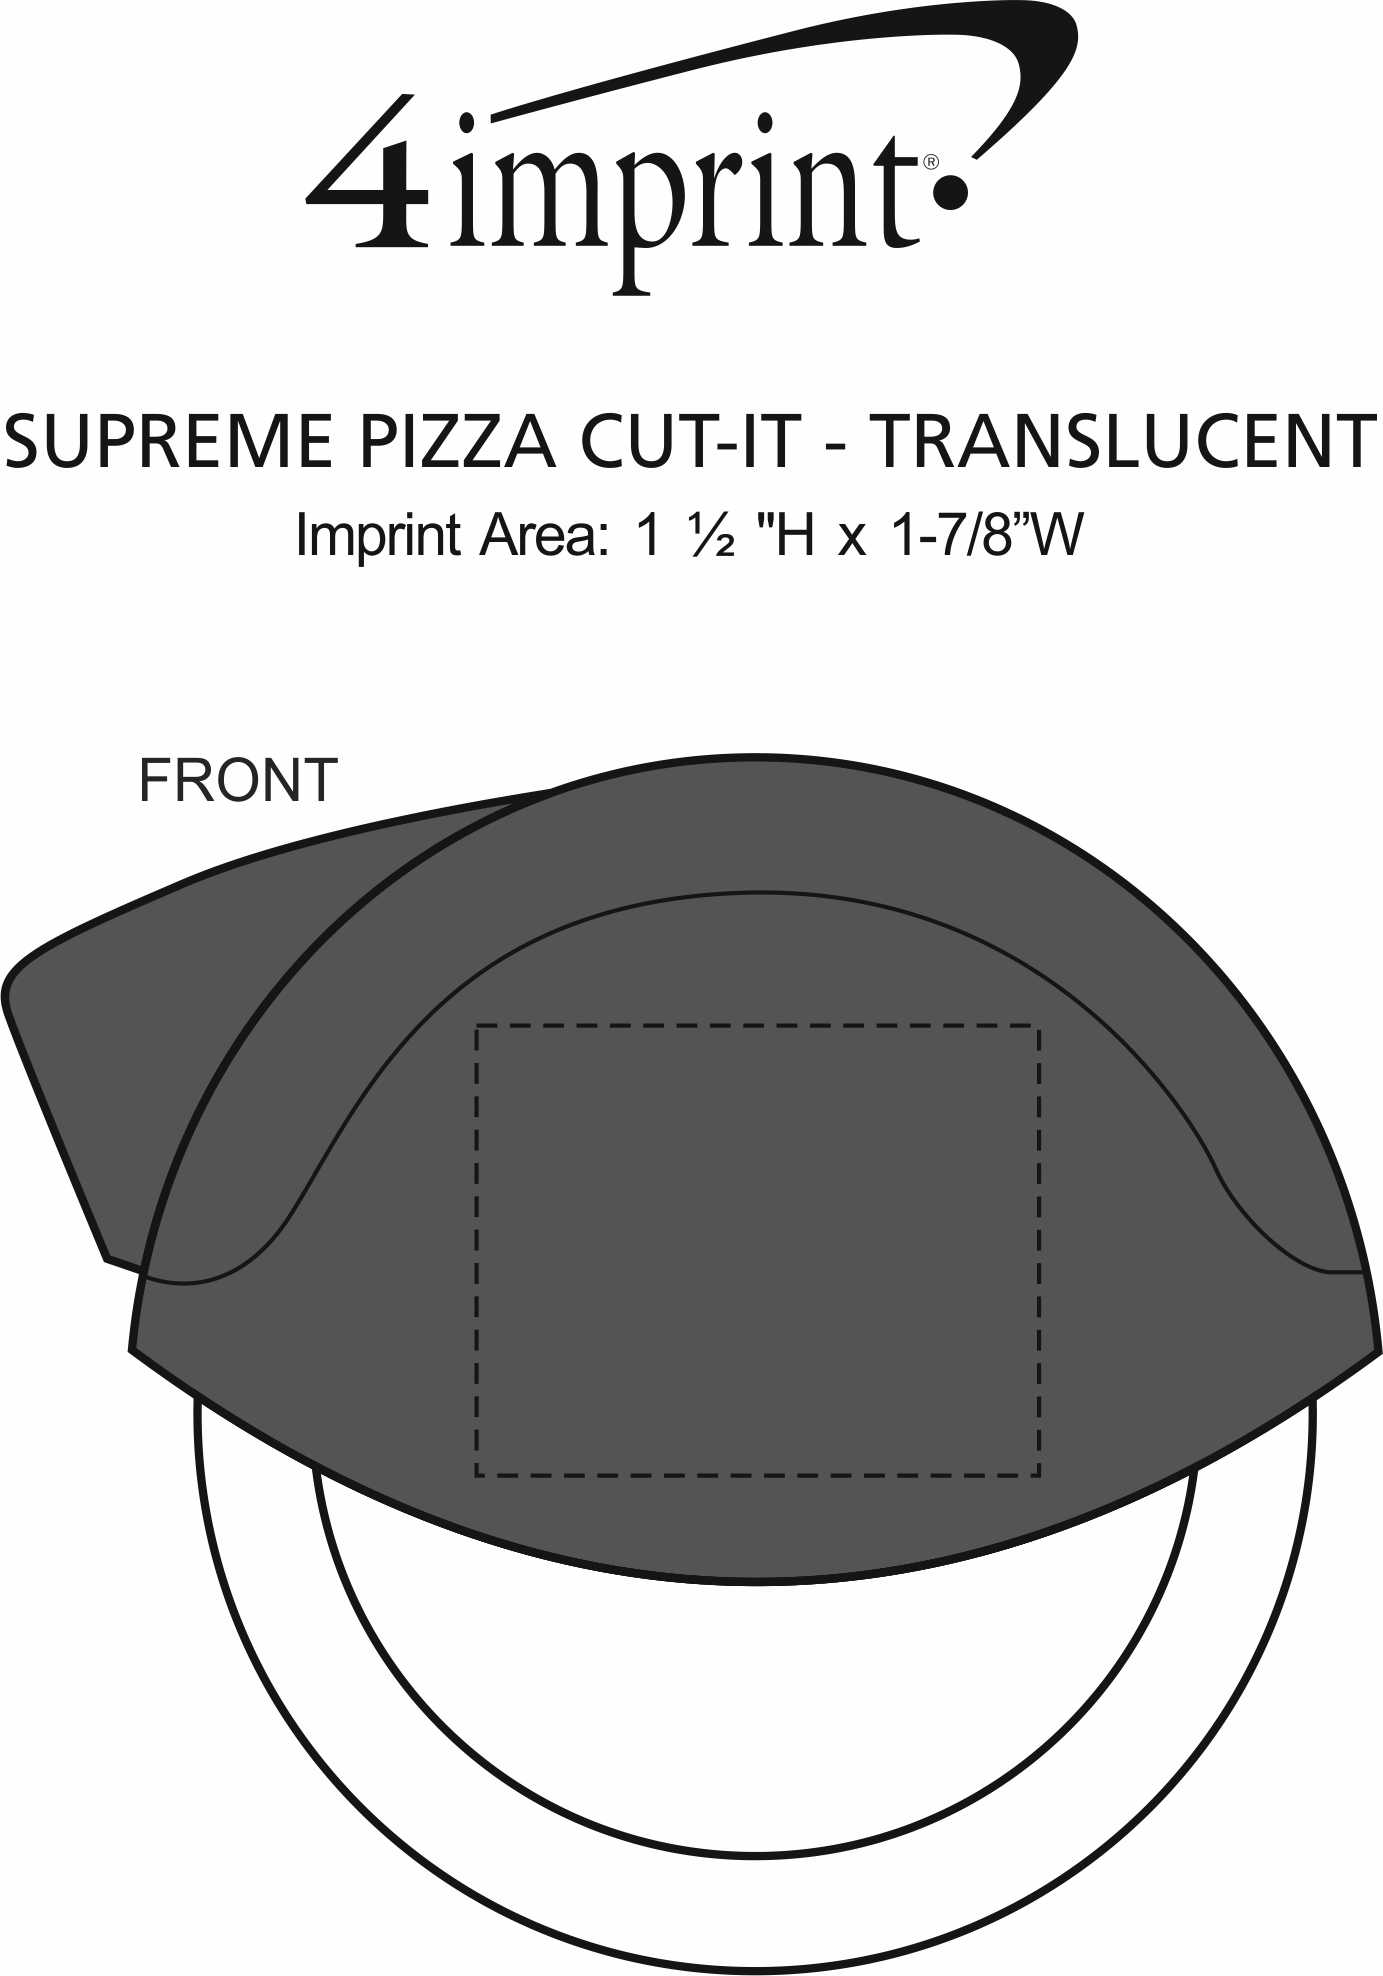 Imprint Area of Supreme Pizza Cut-It - Translucent